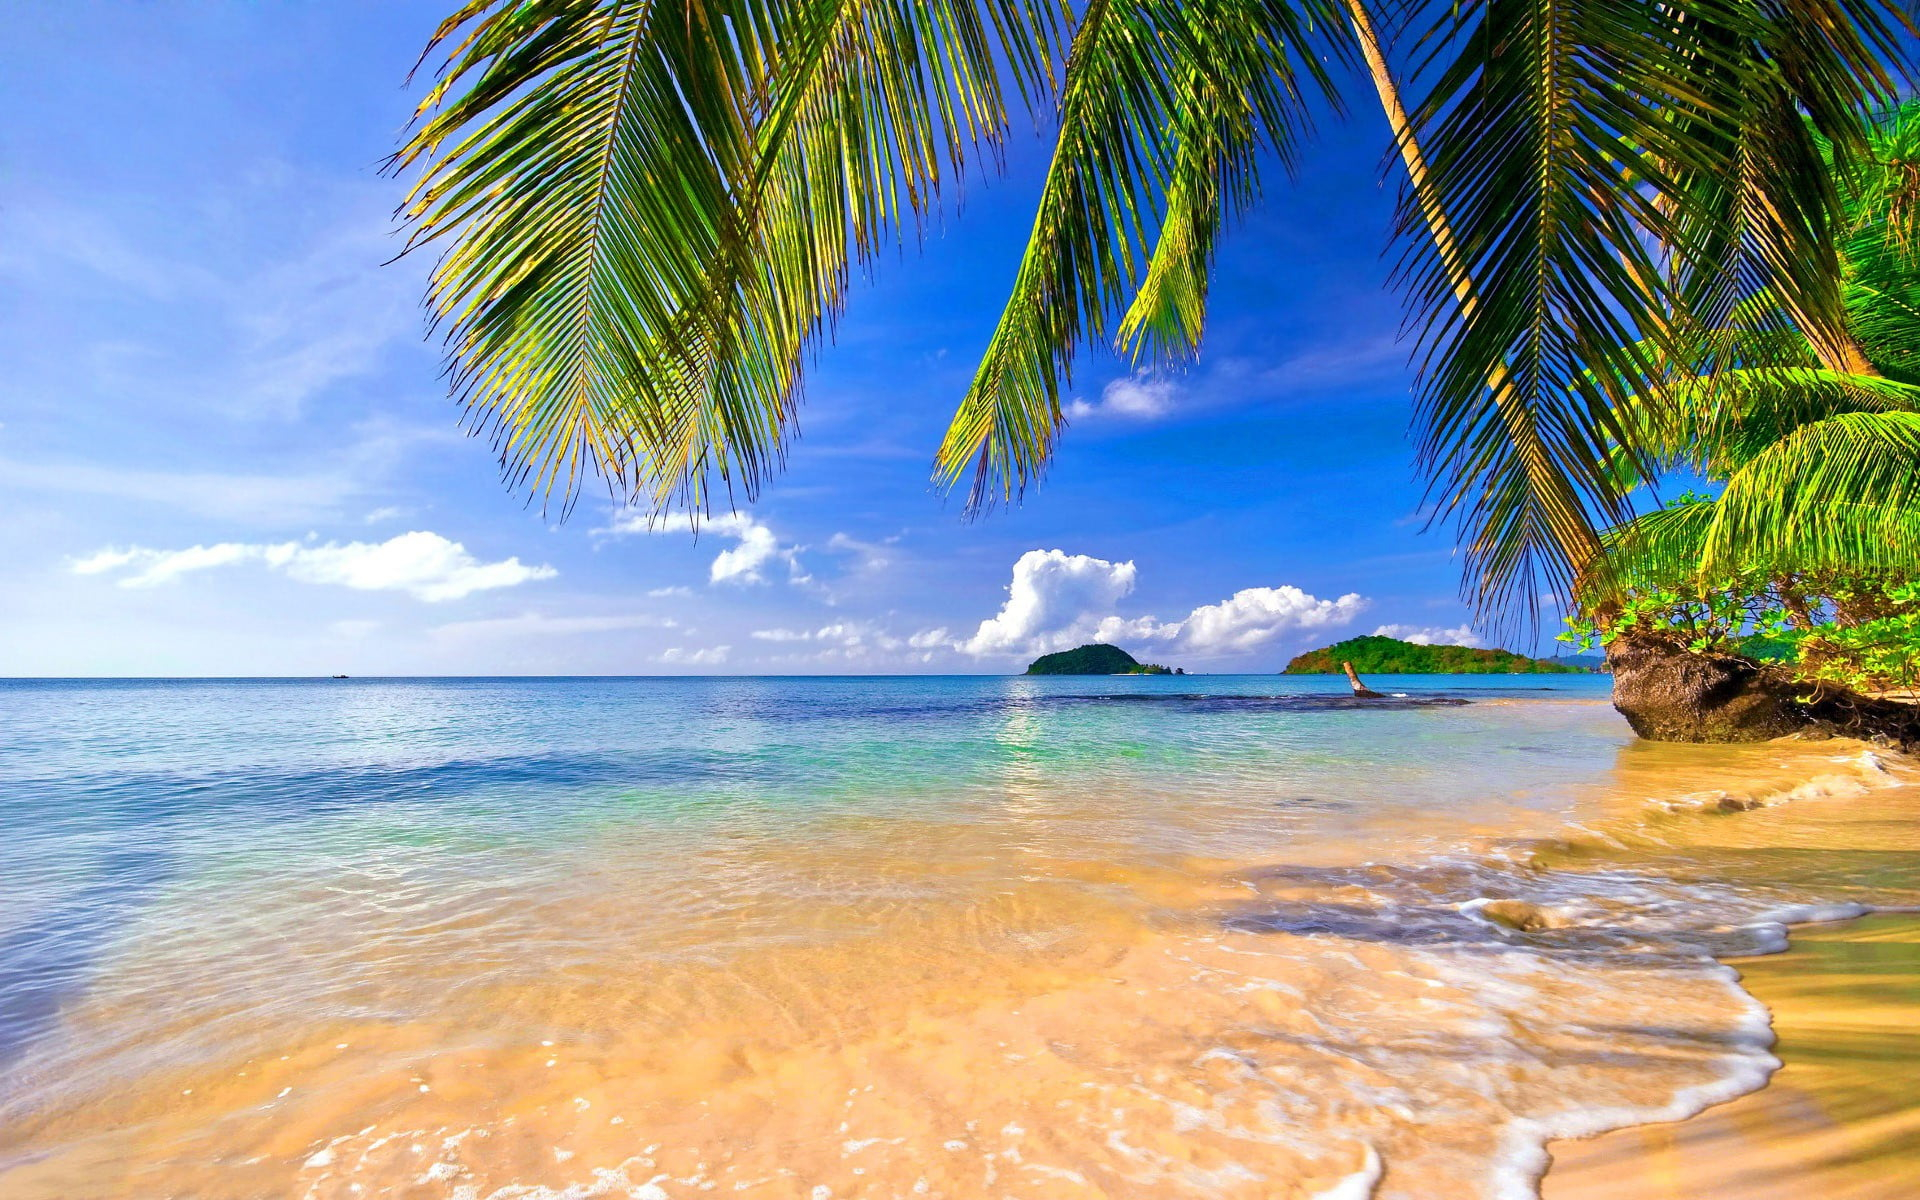 Coconut trees near water, landscape, tropical, beach, palm trees wallpaper